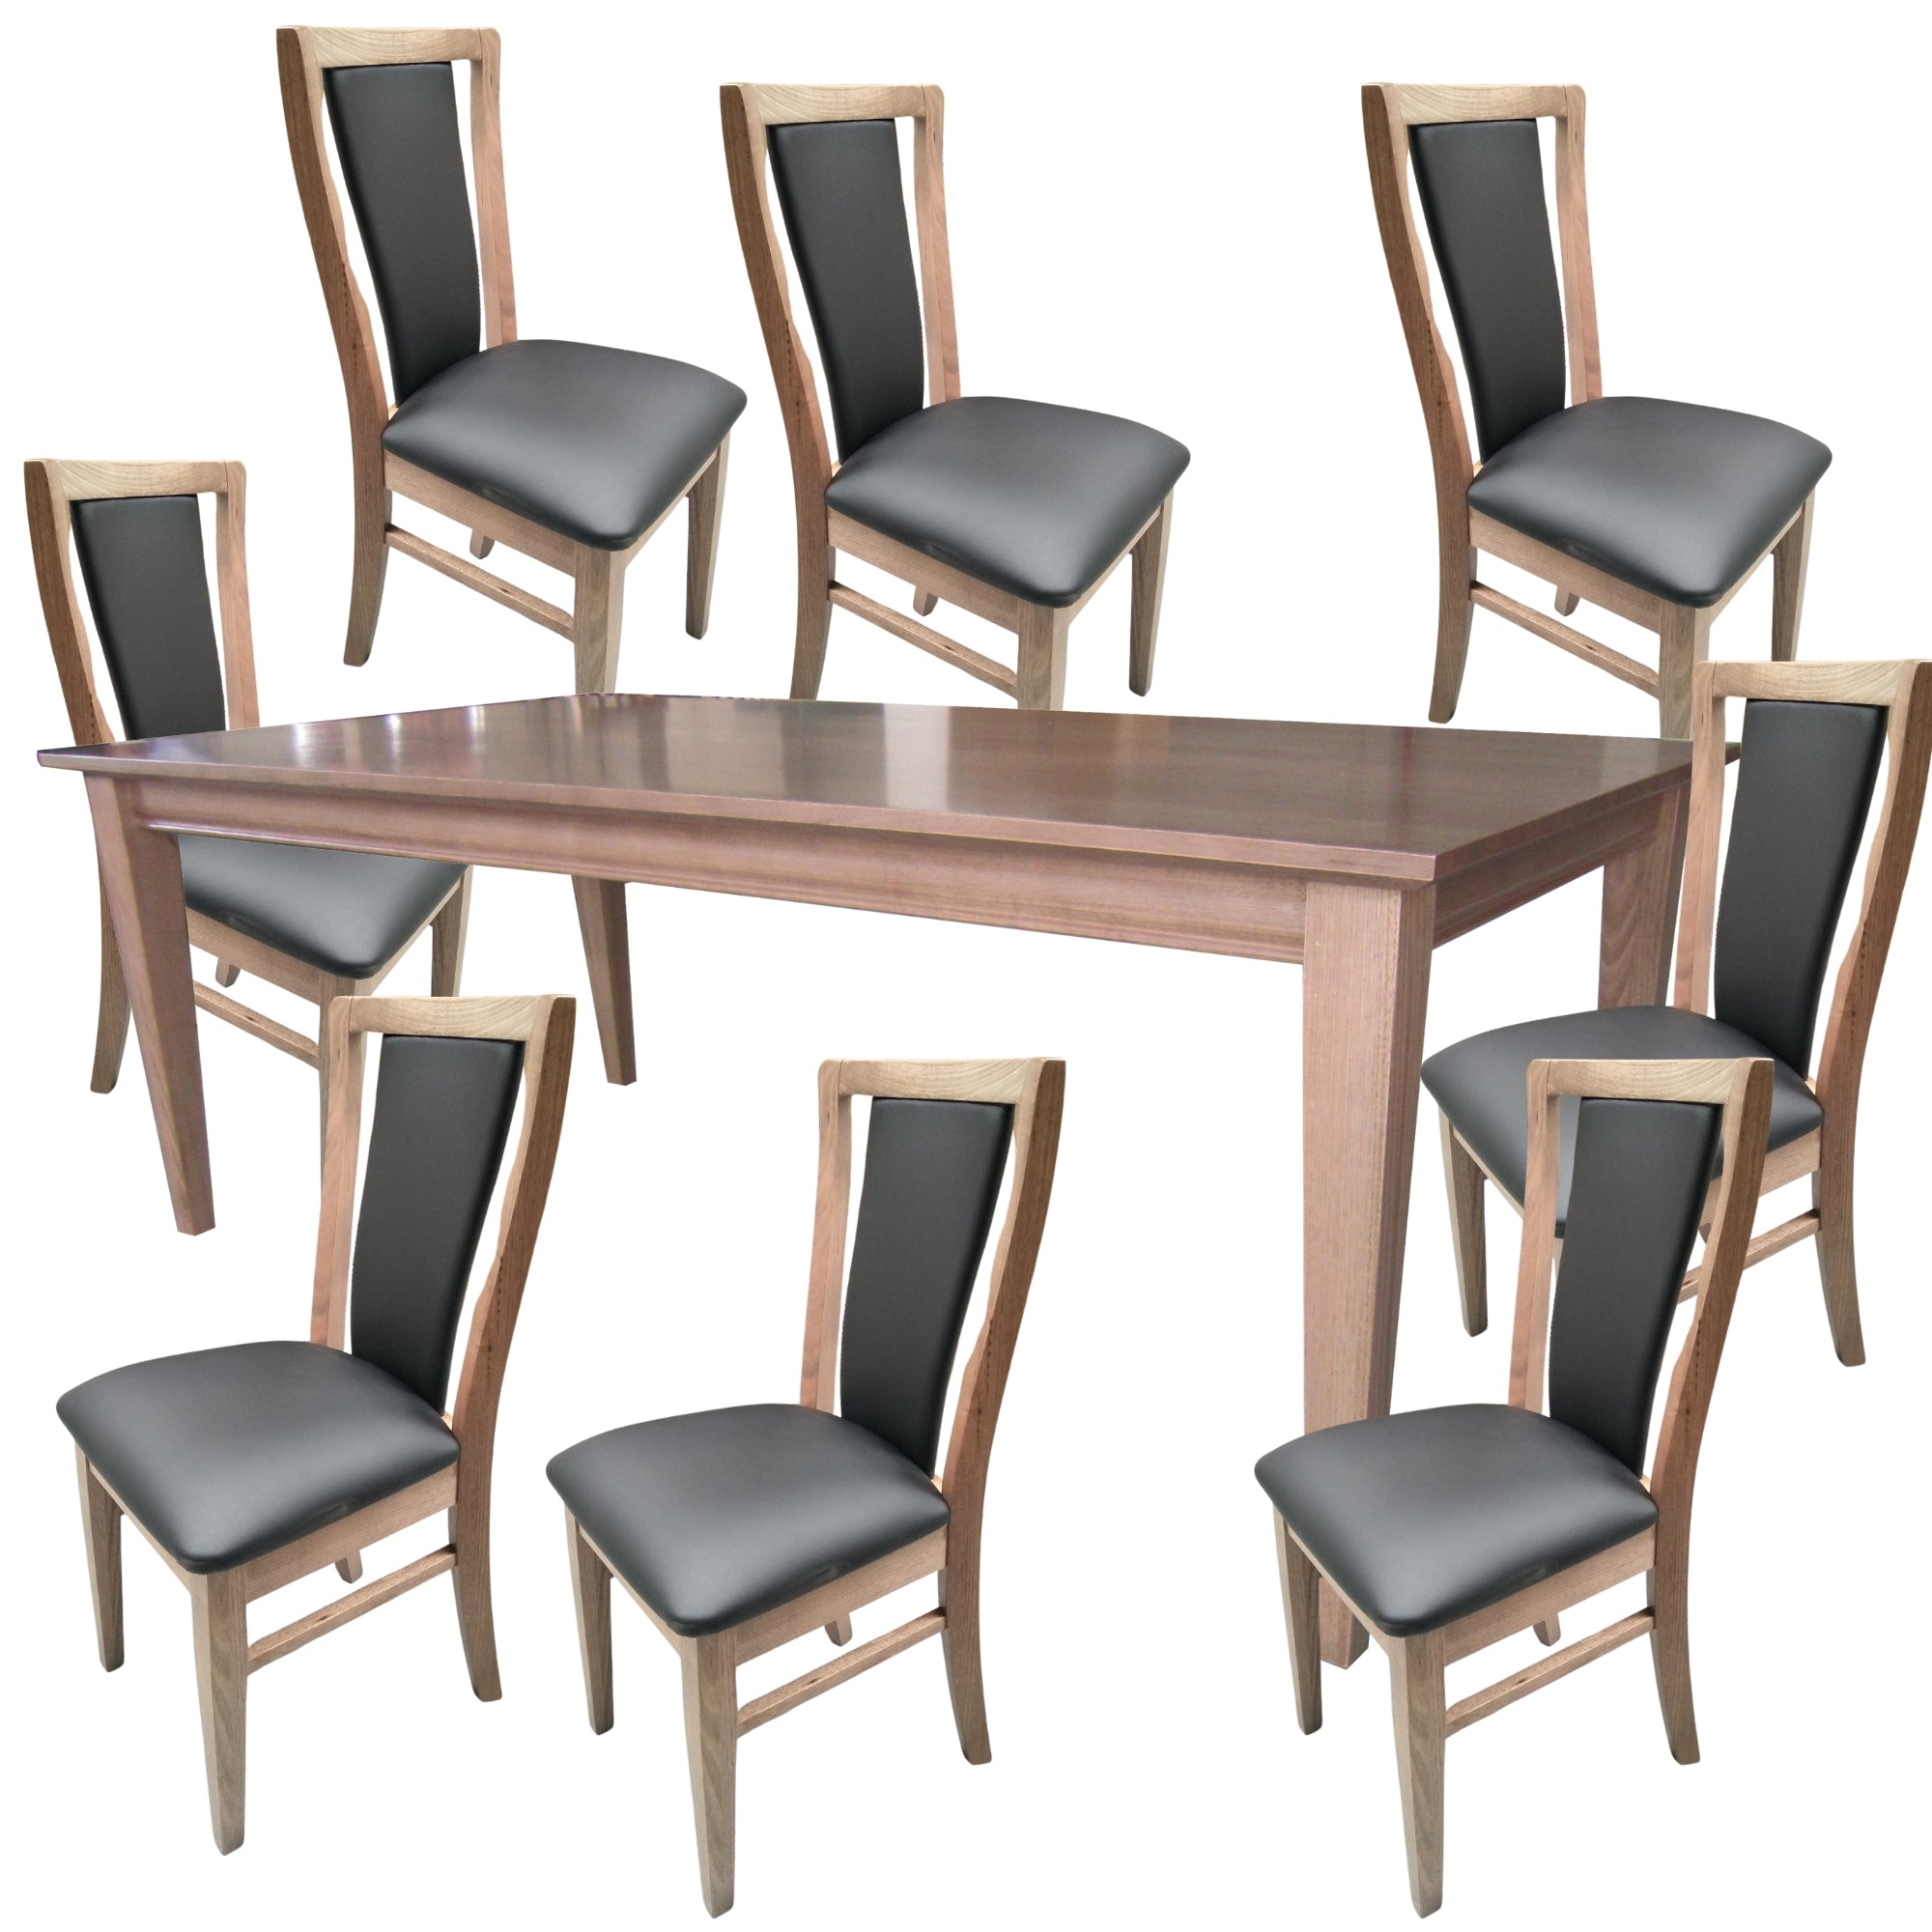 9pc Smoke Dining Set, PU Leather Chairs, Oak Wood Frame